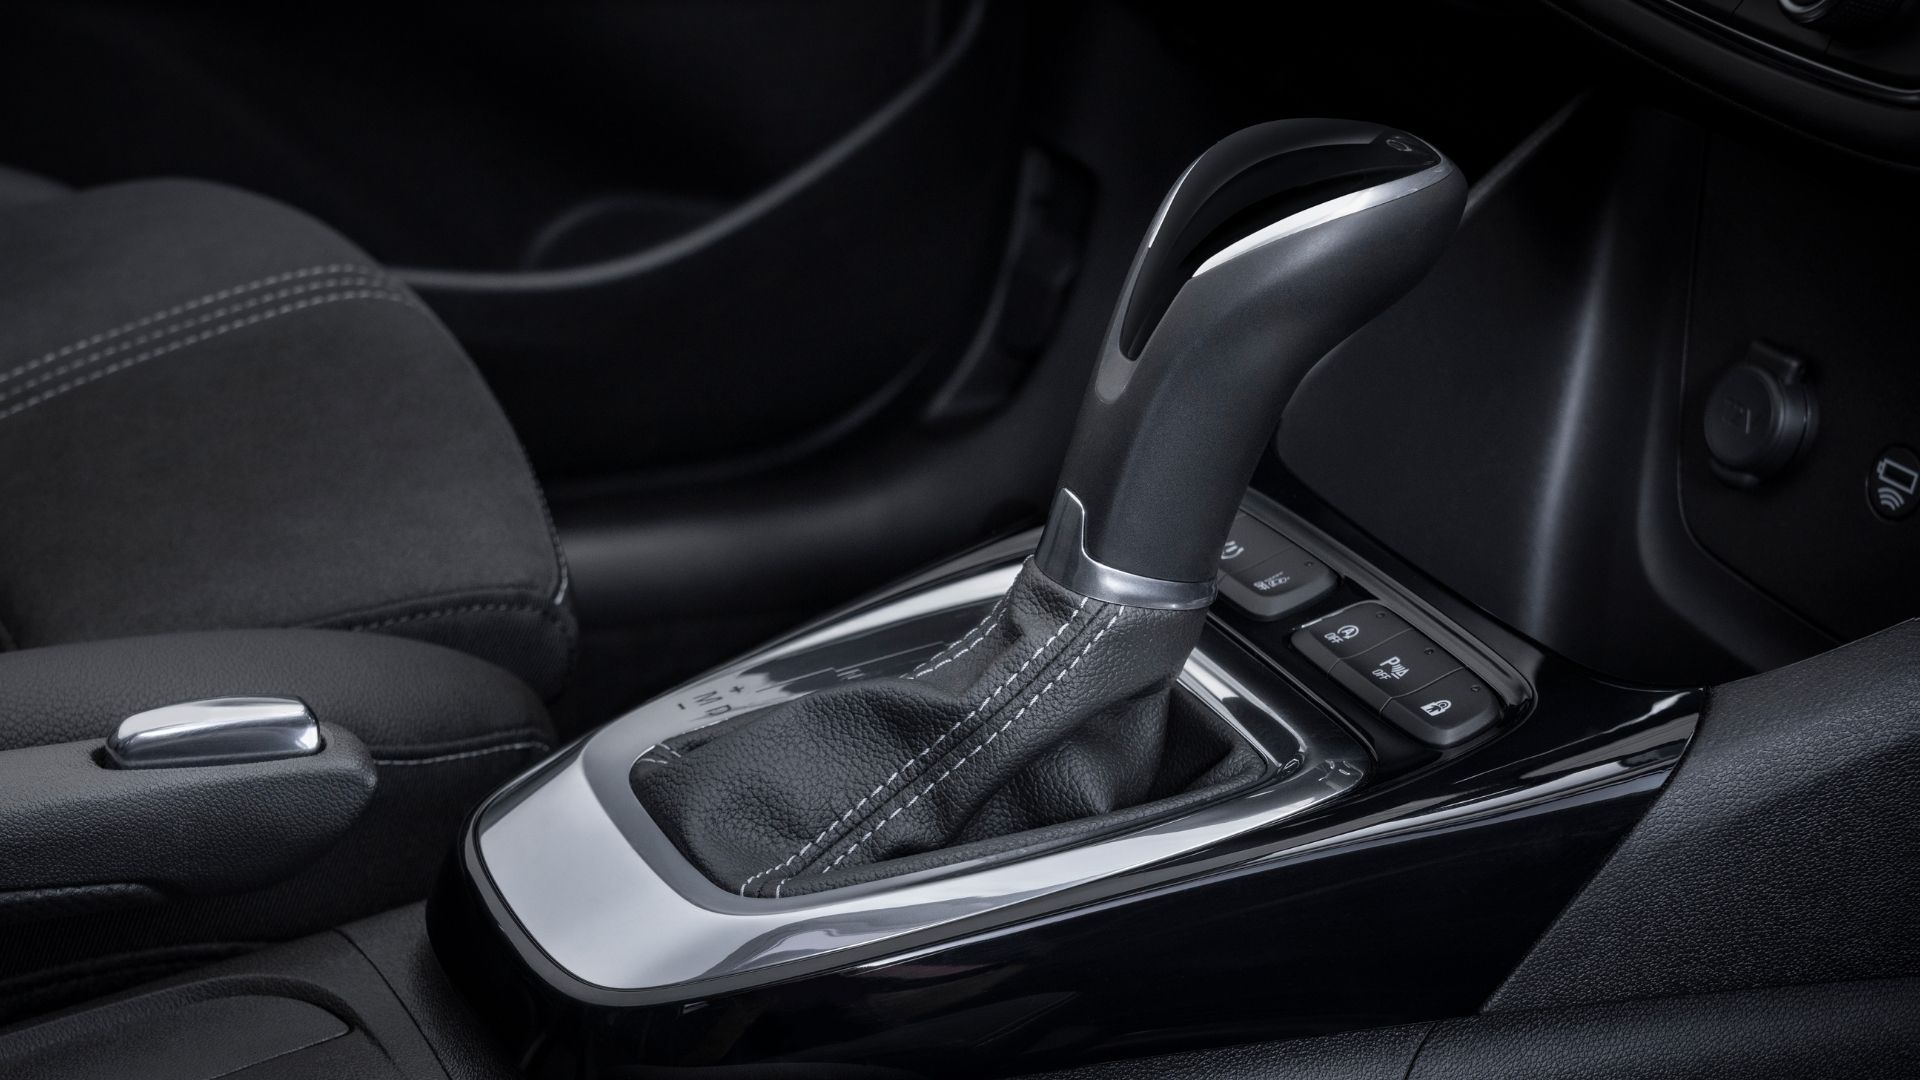 Test Drive || Opel Crossland 1.2 130 PS Auto: Τα κάνει όλα!